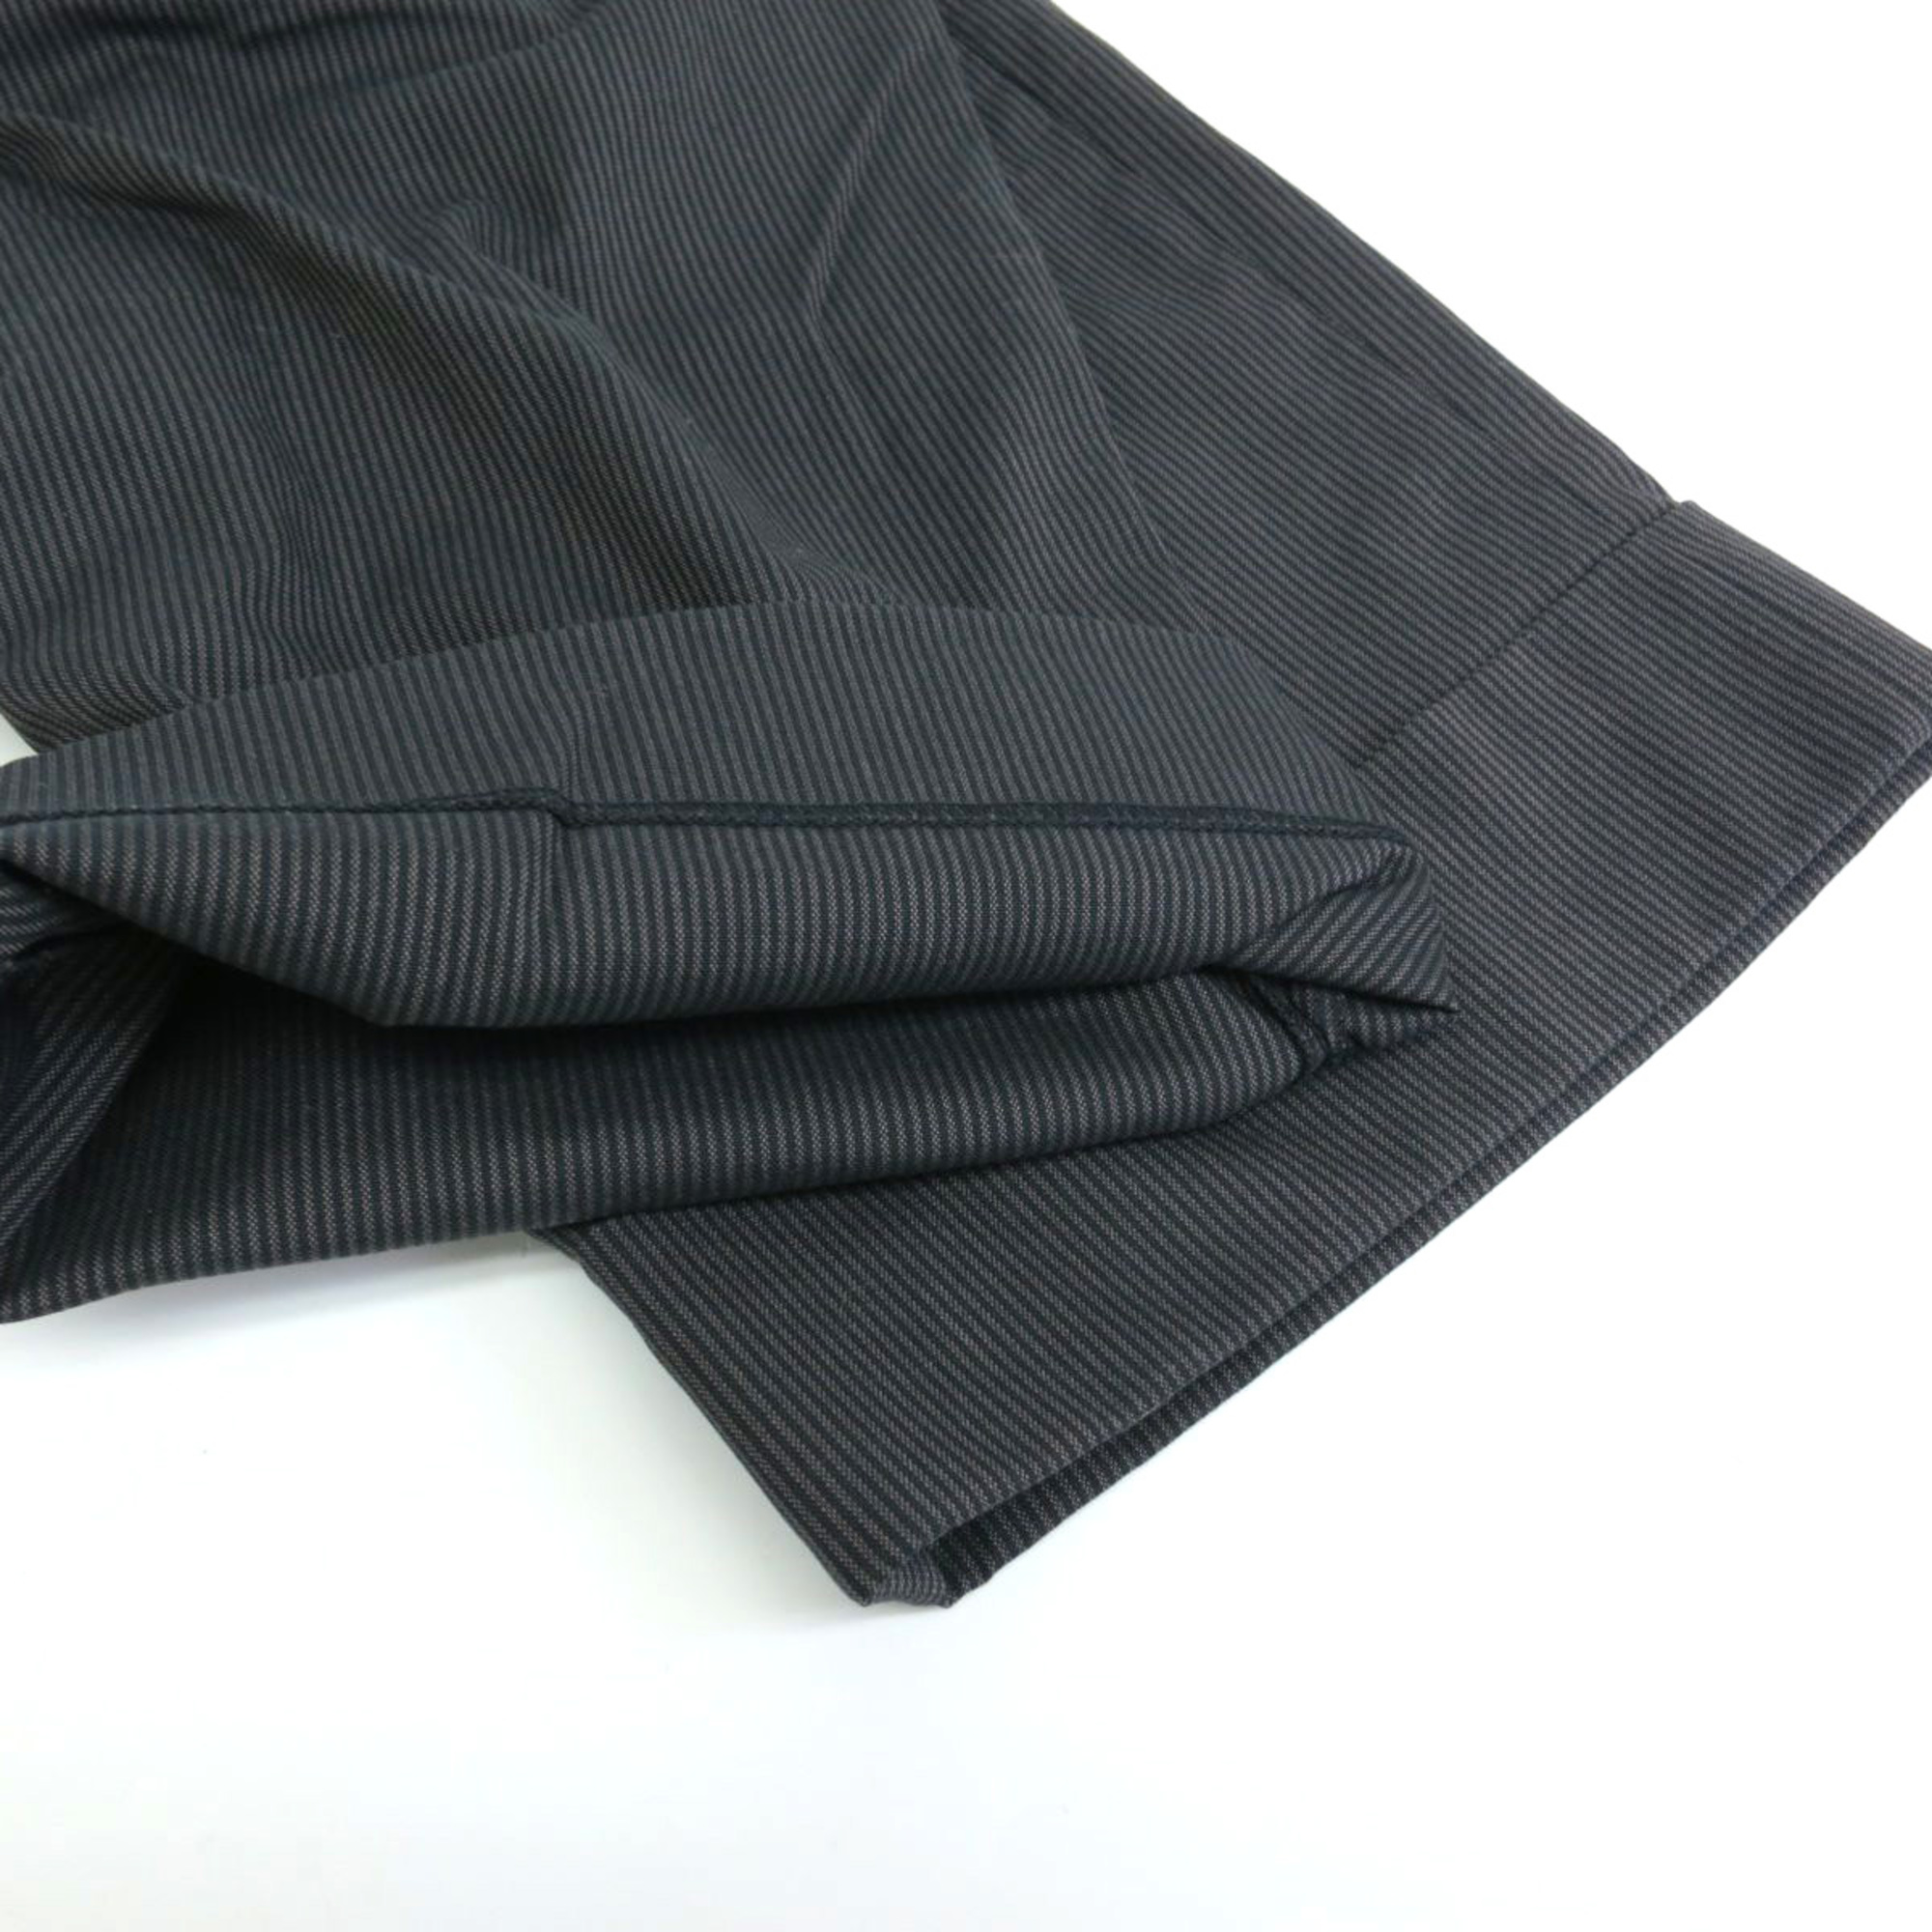 Marc Jacobs Stripe Short Pants Cotton/Polyurethane Black 4 Ladies